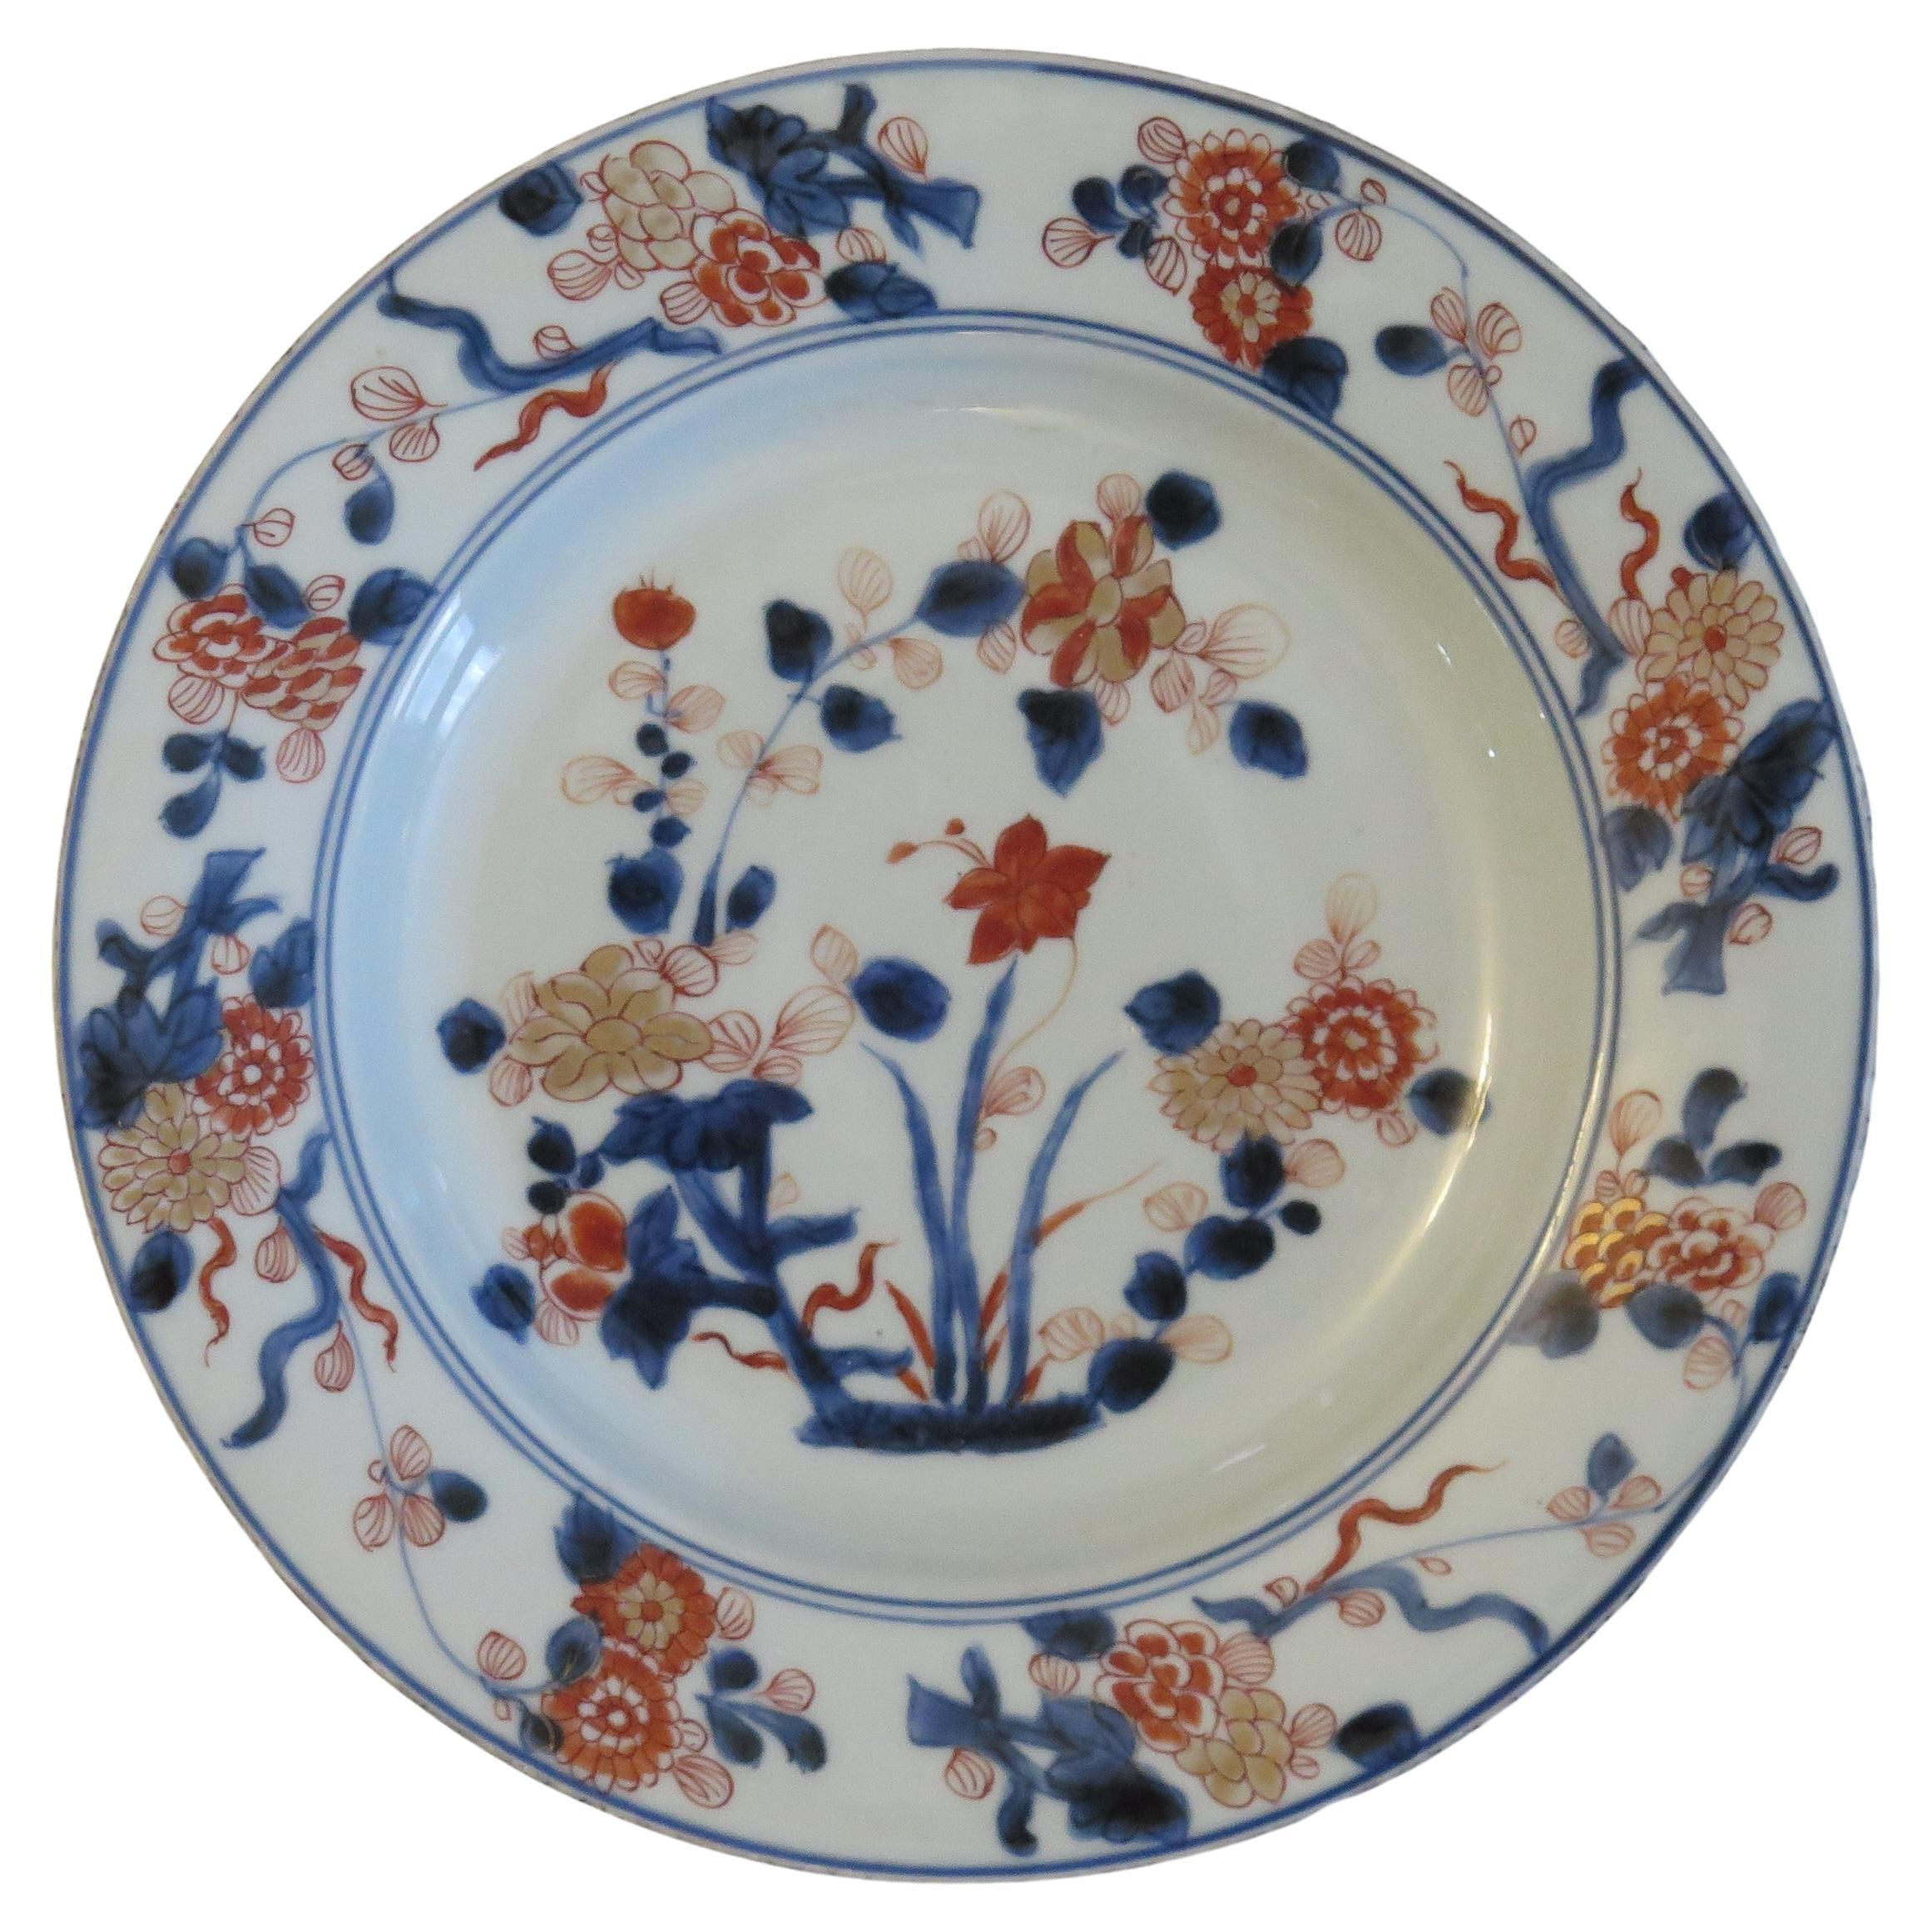 Chinese Imari Porcelain Plate or Bowl Qing Kangxi Mark & period, Ca 1700 